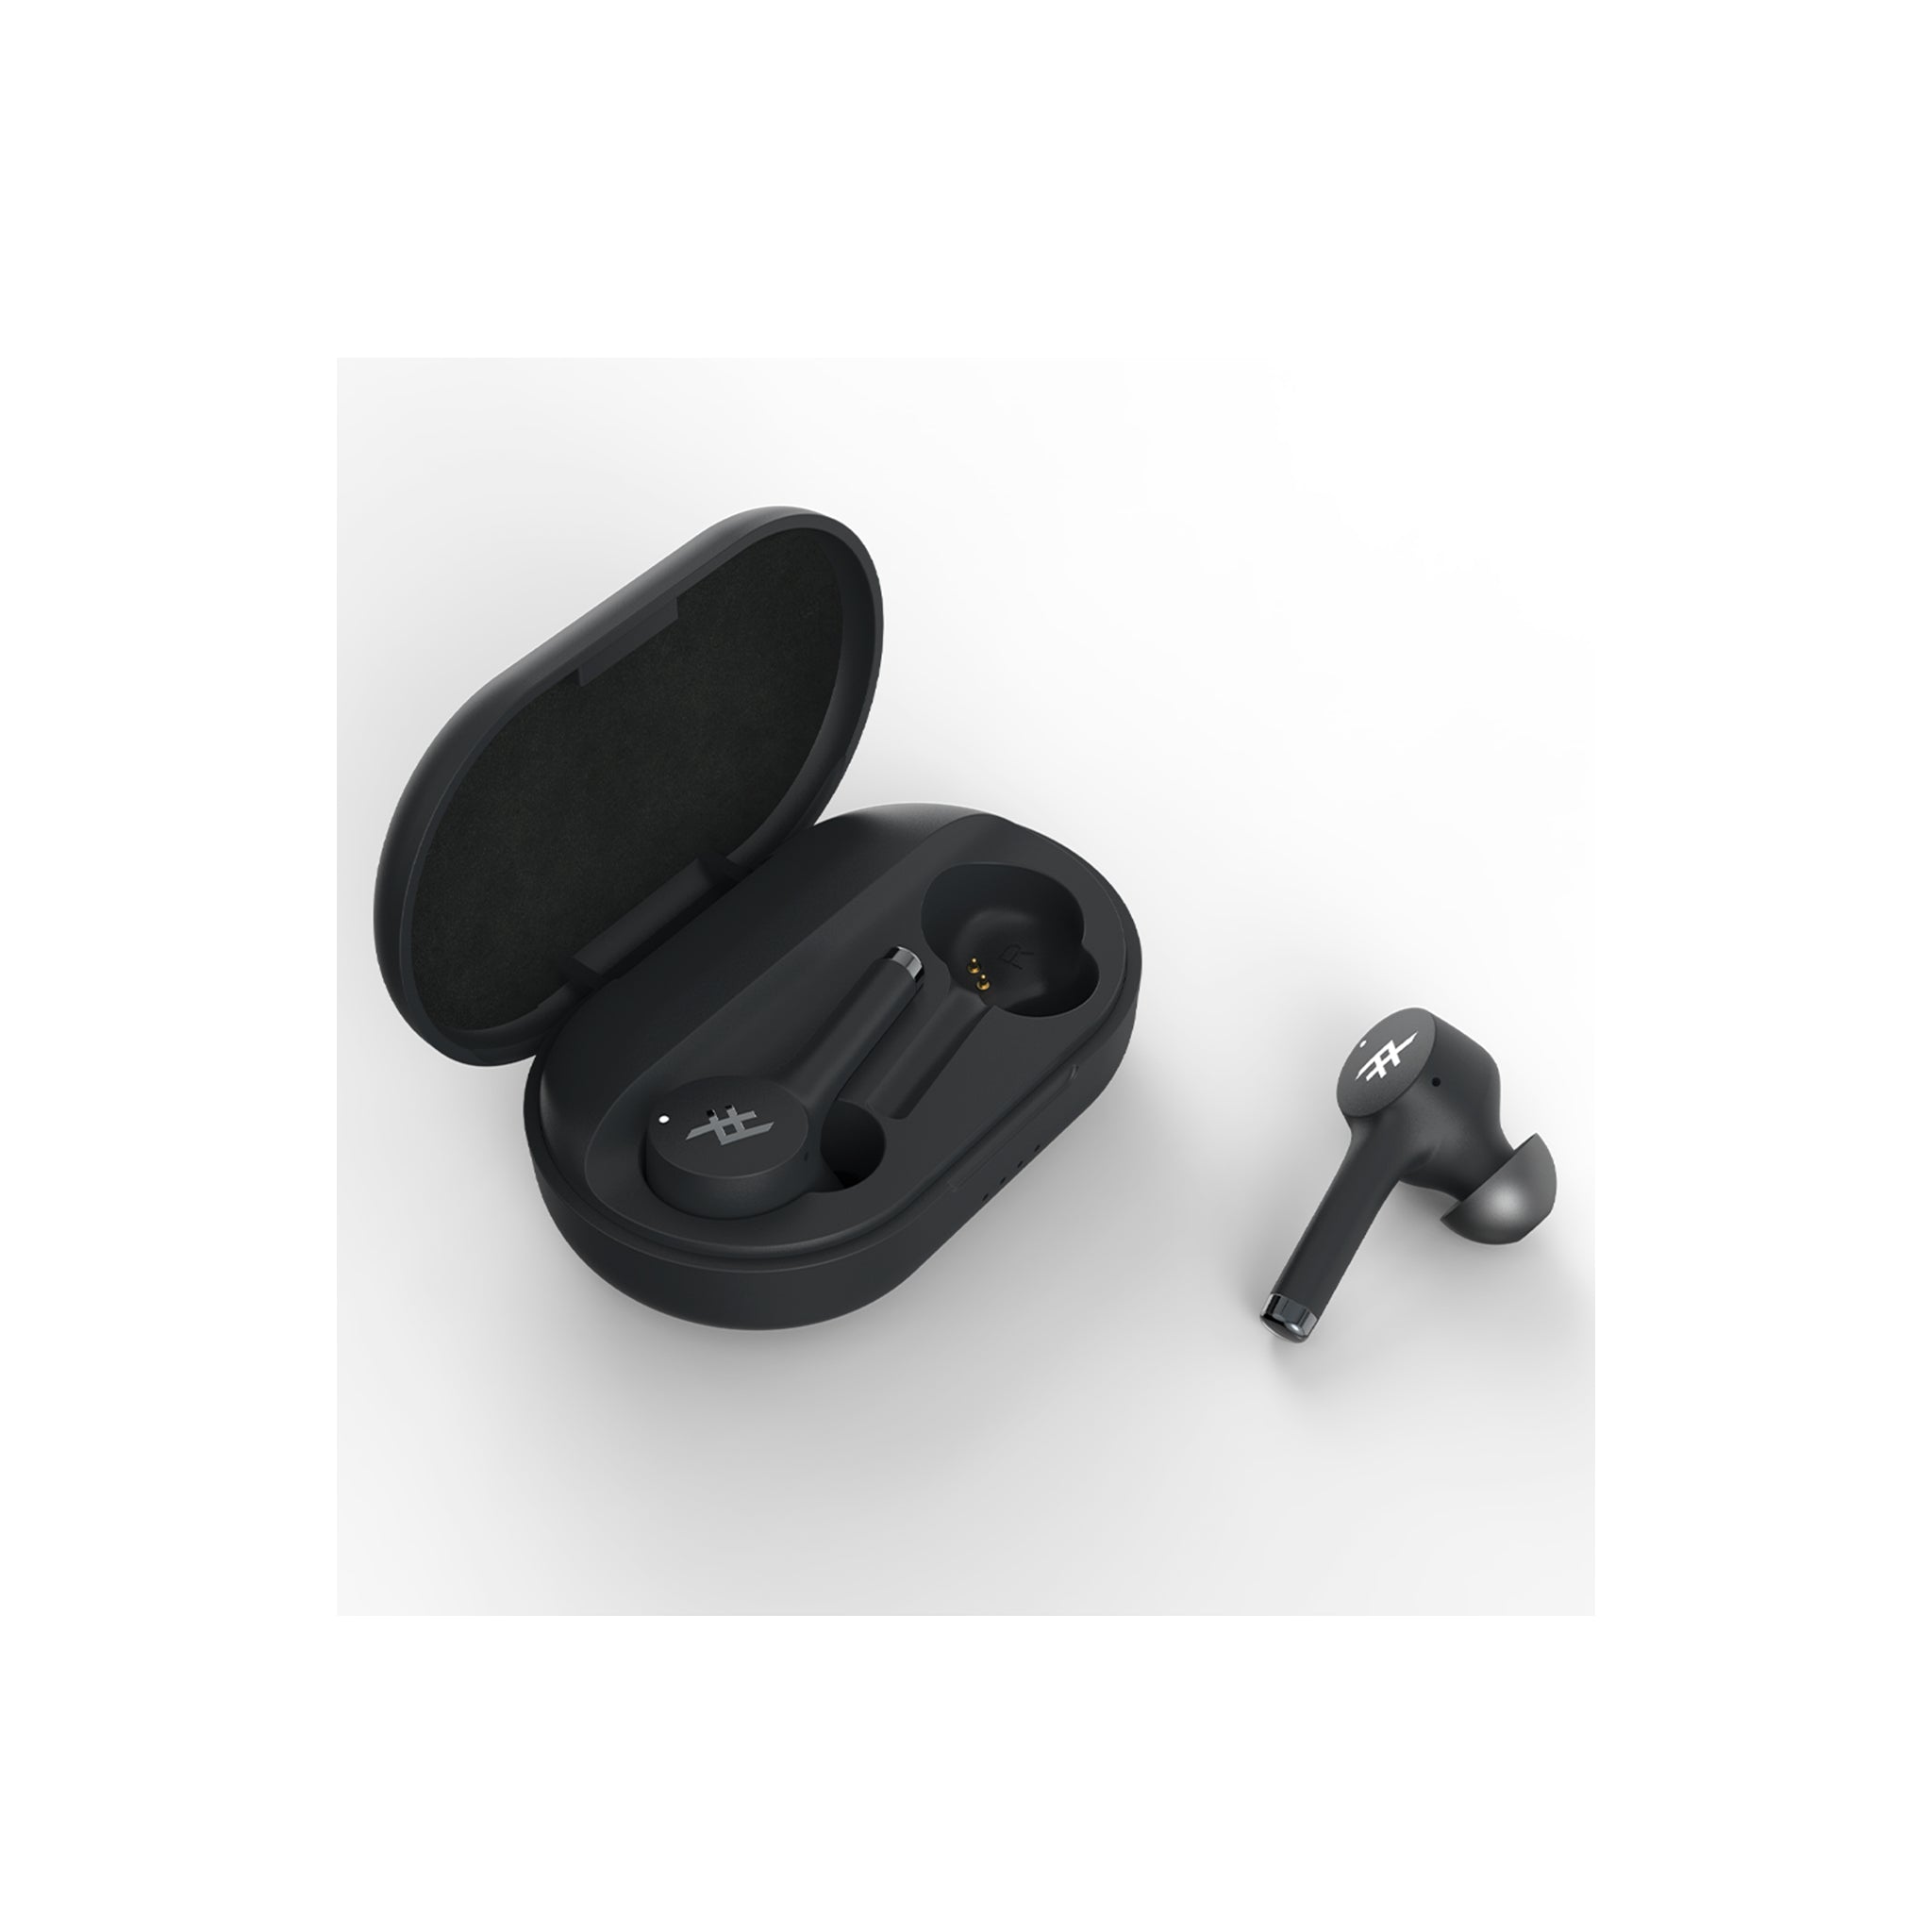 Ifrogz - Airtime Pro True Wireless In Ear Bluetooth Earbuds - Black